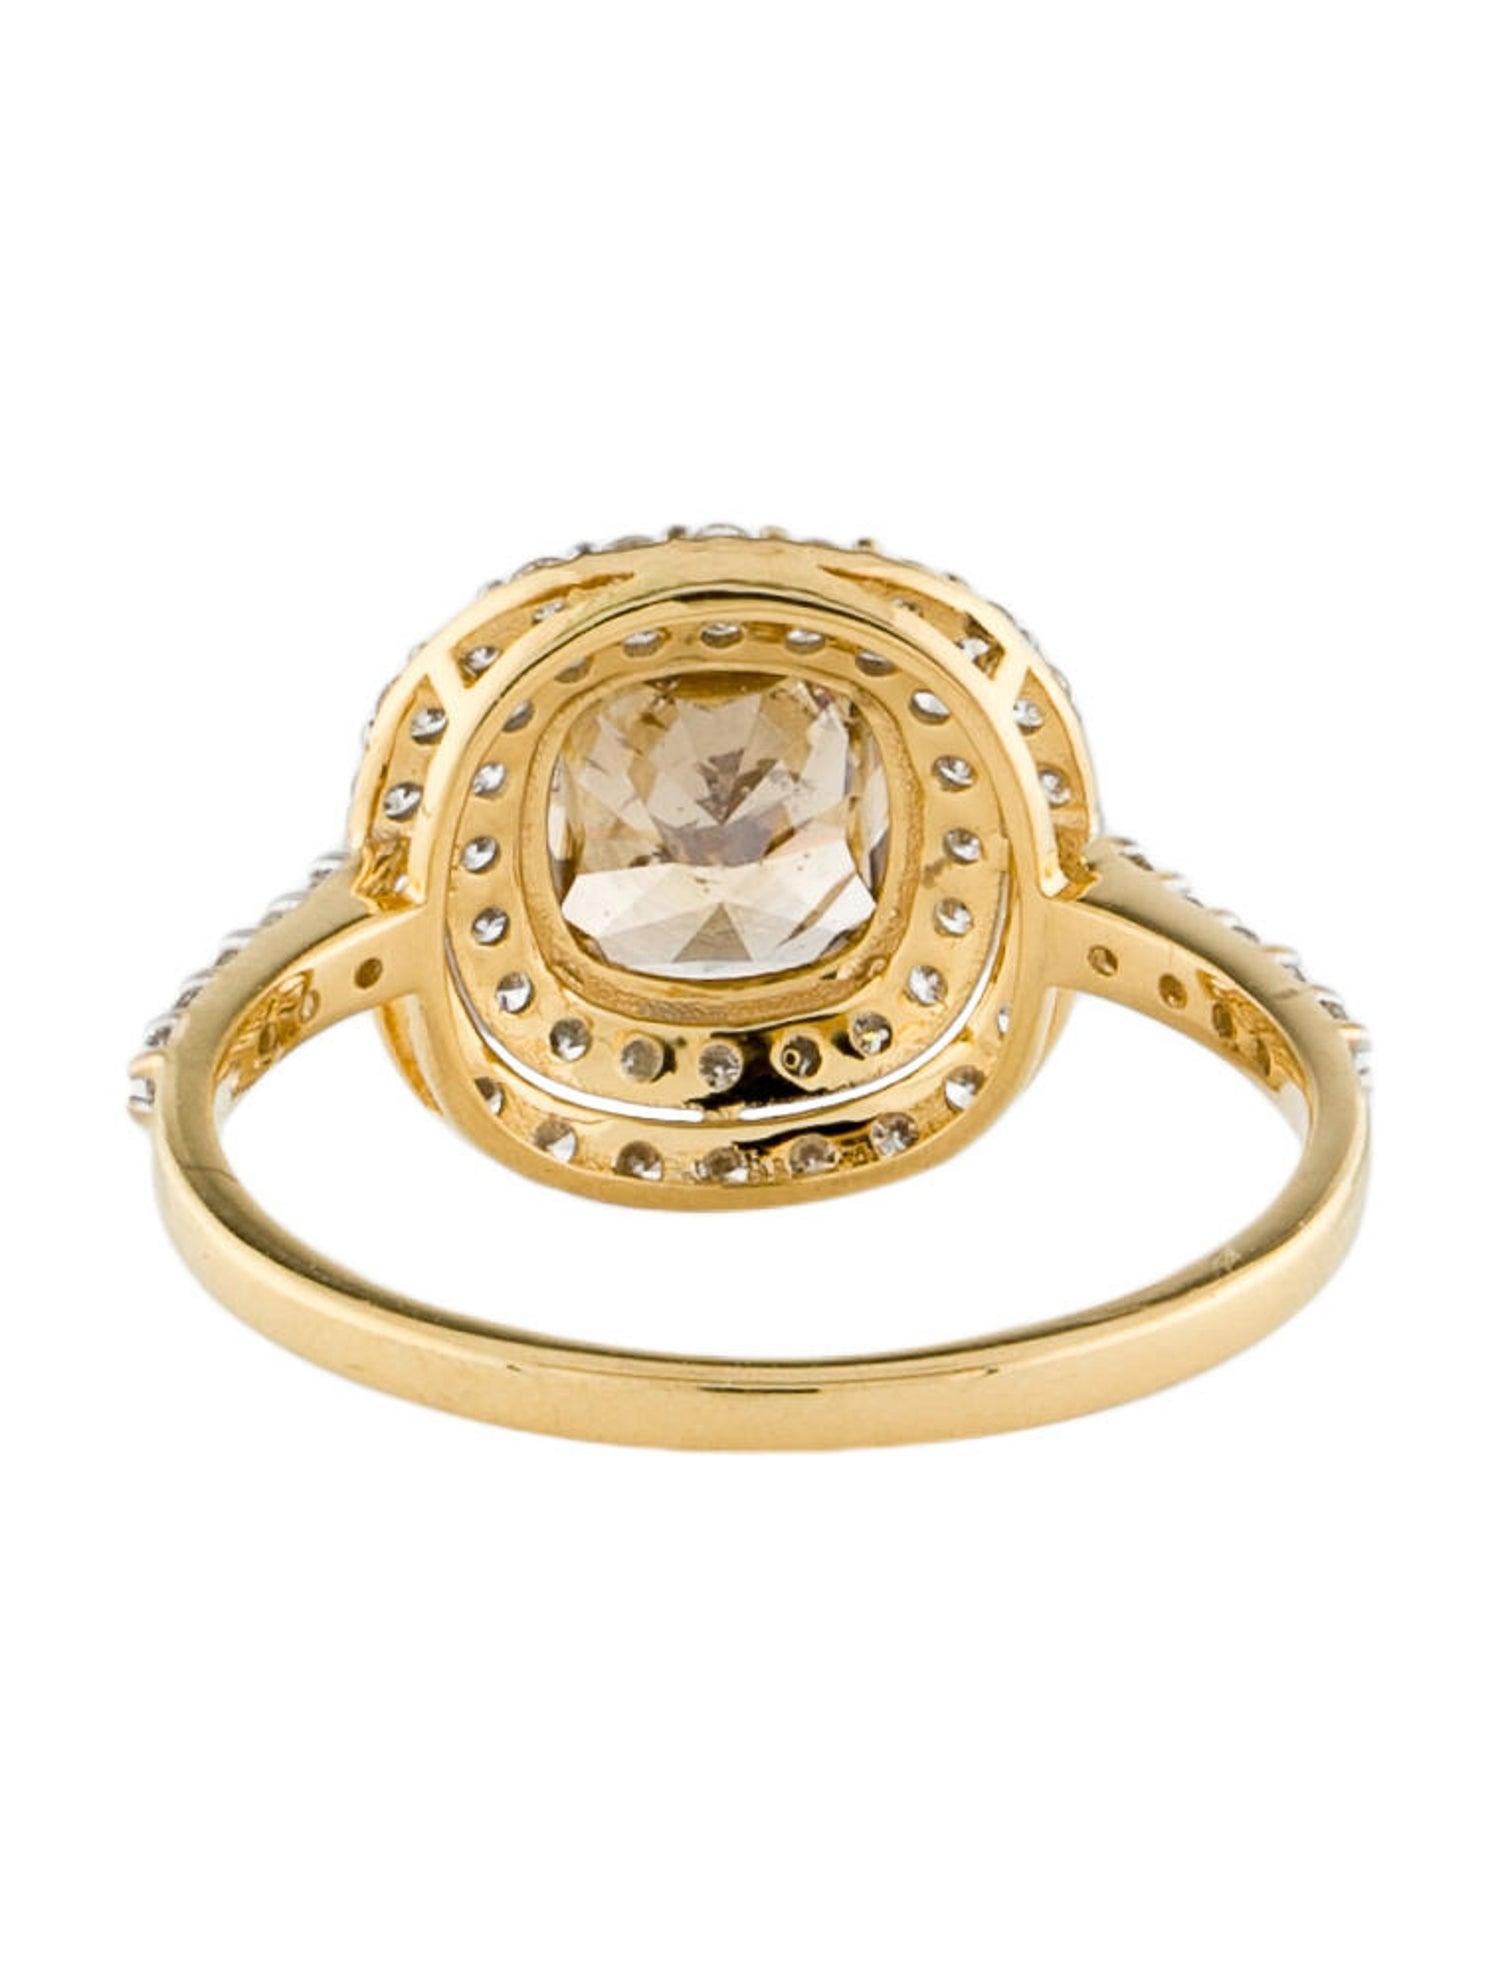 Brilliant Cut Elegant 2.15ct Diamond Engagement Ring, Size 7.25 - Statement Jewelry Piece For Sale